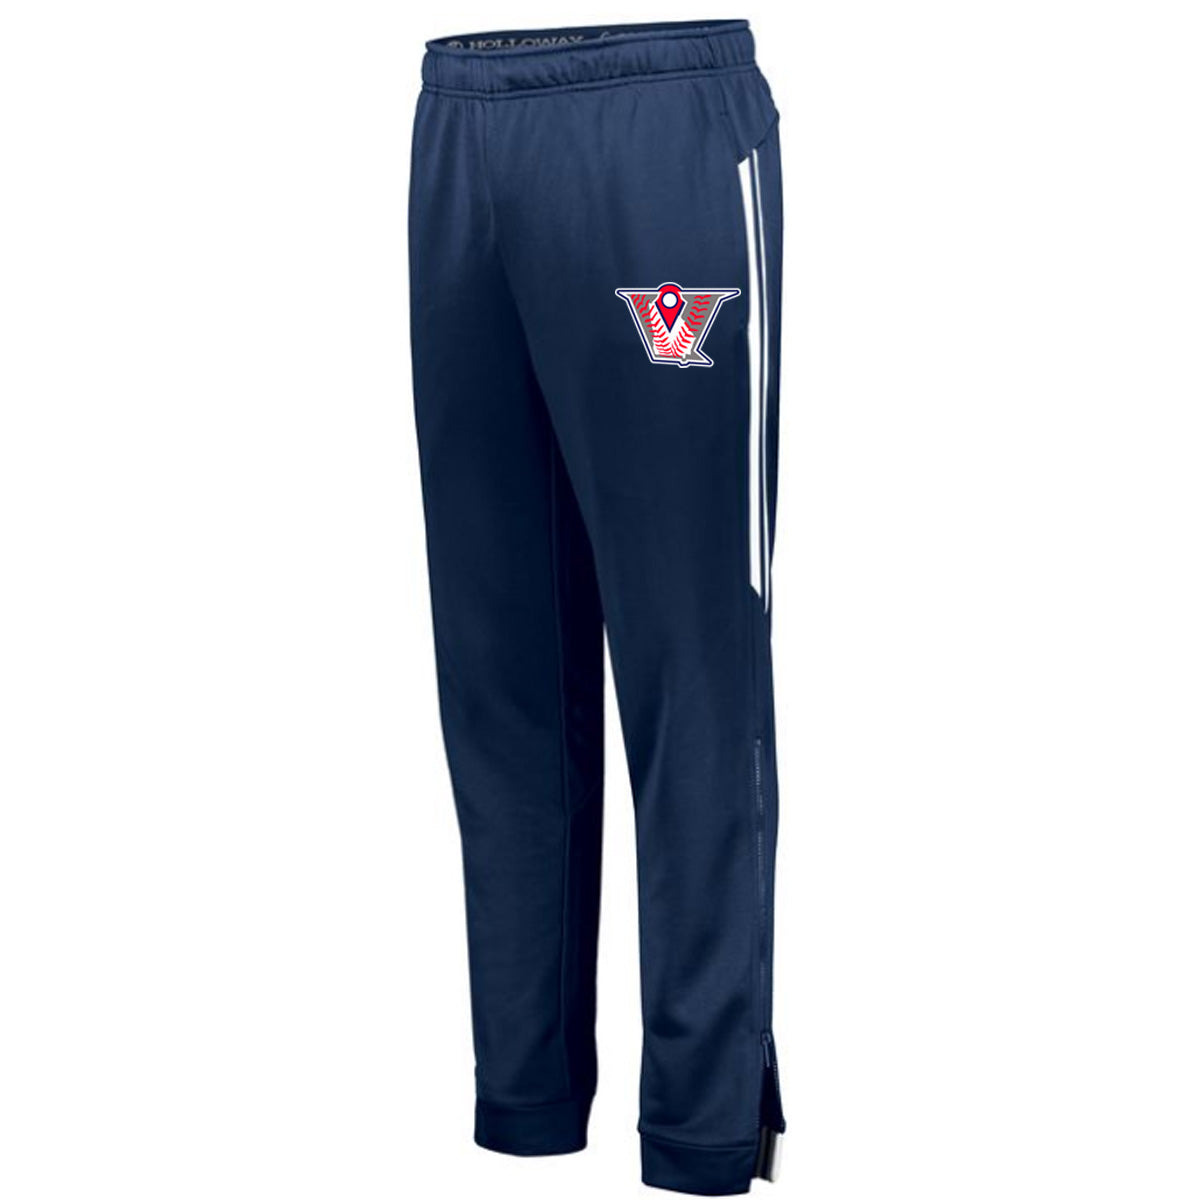 Velo BB - Retro Grade Pants with V Logo - Navy - Southern Grace Creations